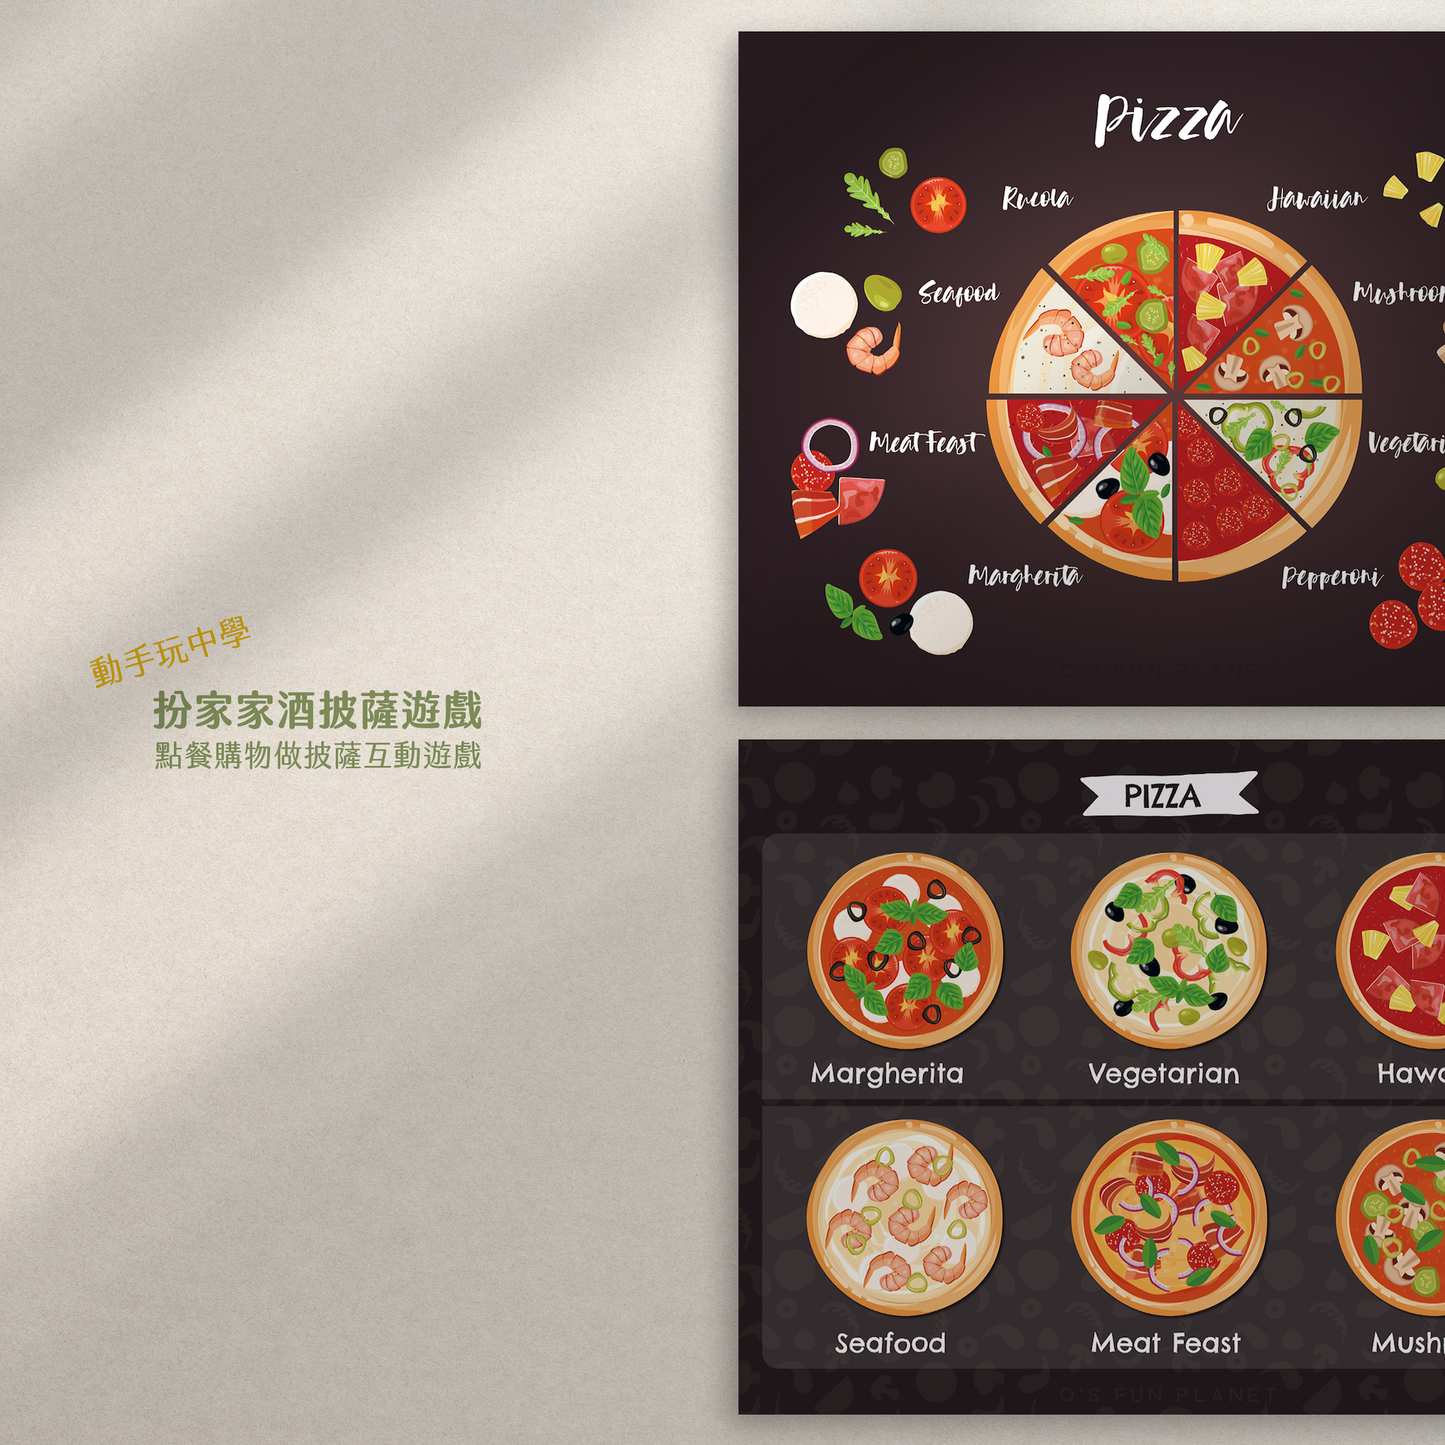 Pizza Making Game | Ingredients Flashcards